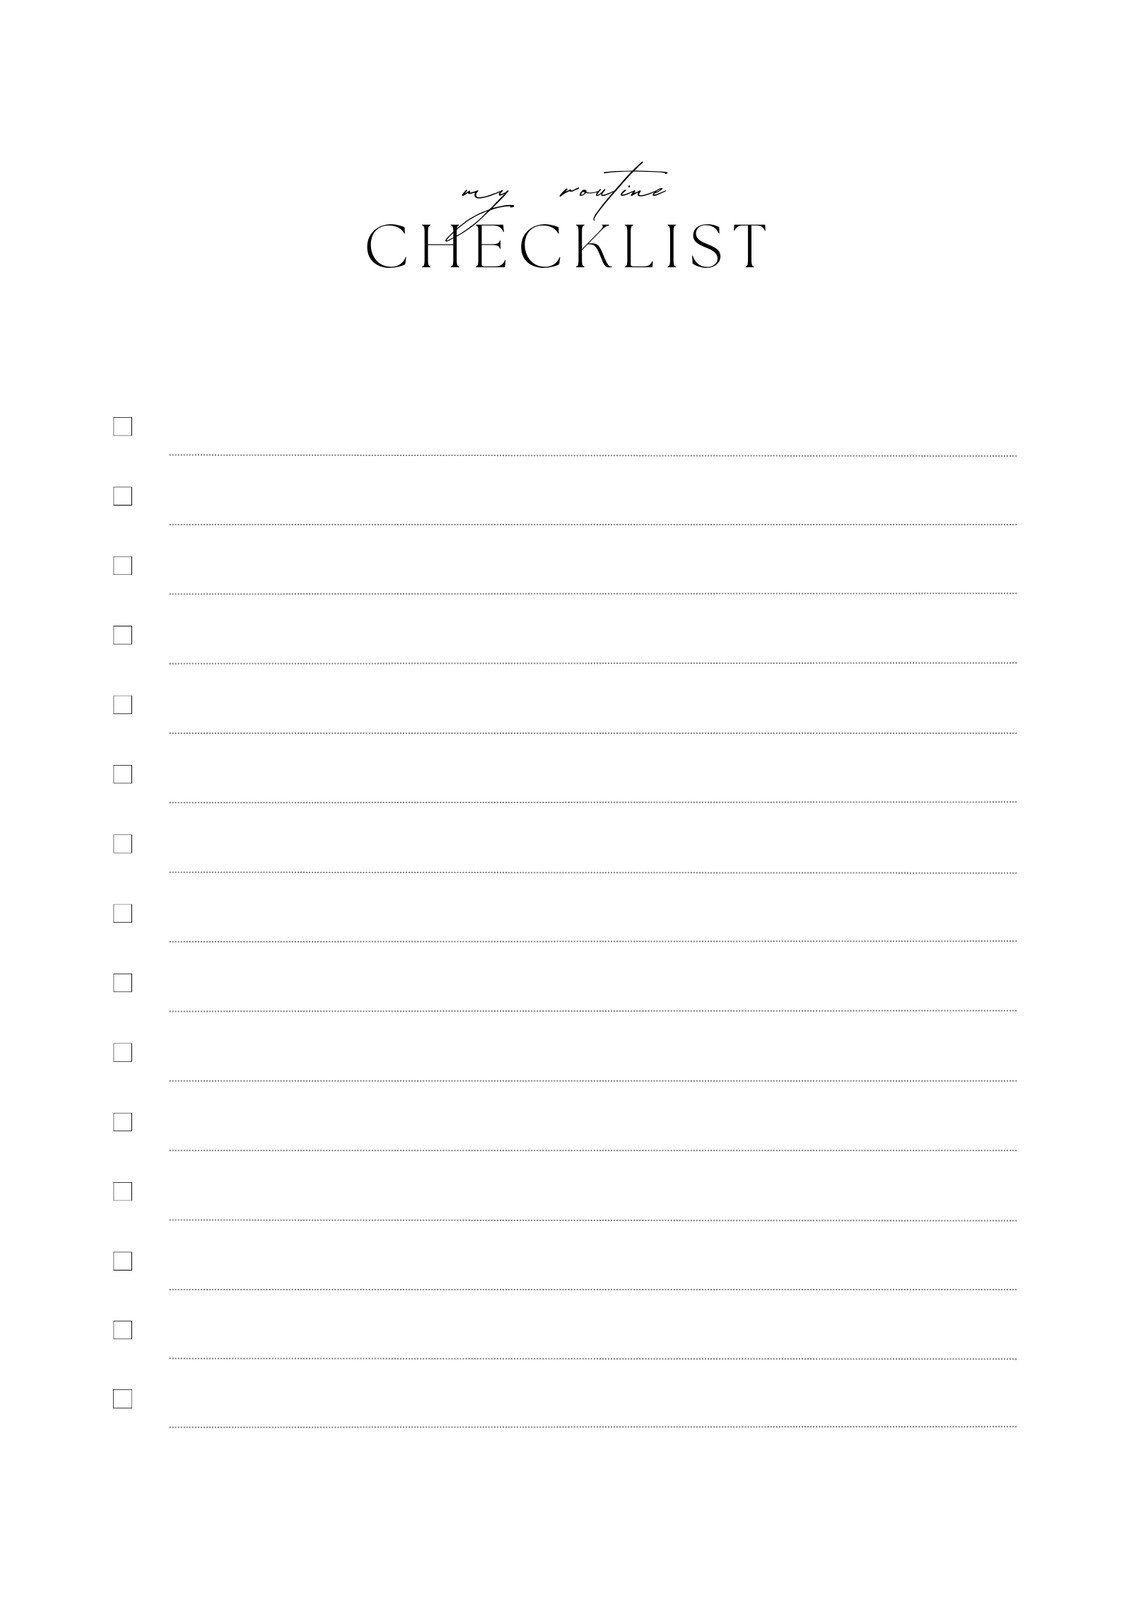 https://marketplace.canva.com/EAFji9oXiiY/1/0/1131w/canva-white-minimalist-elegant-checklist-EDz9pGvMUPY.jpg